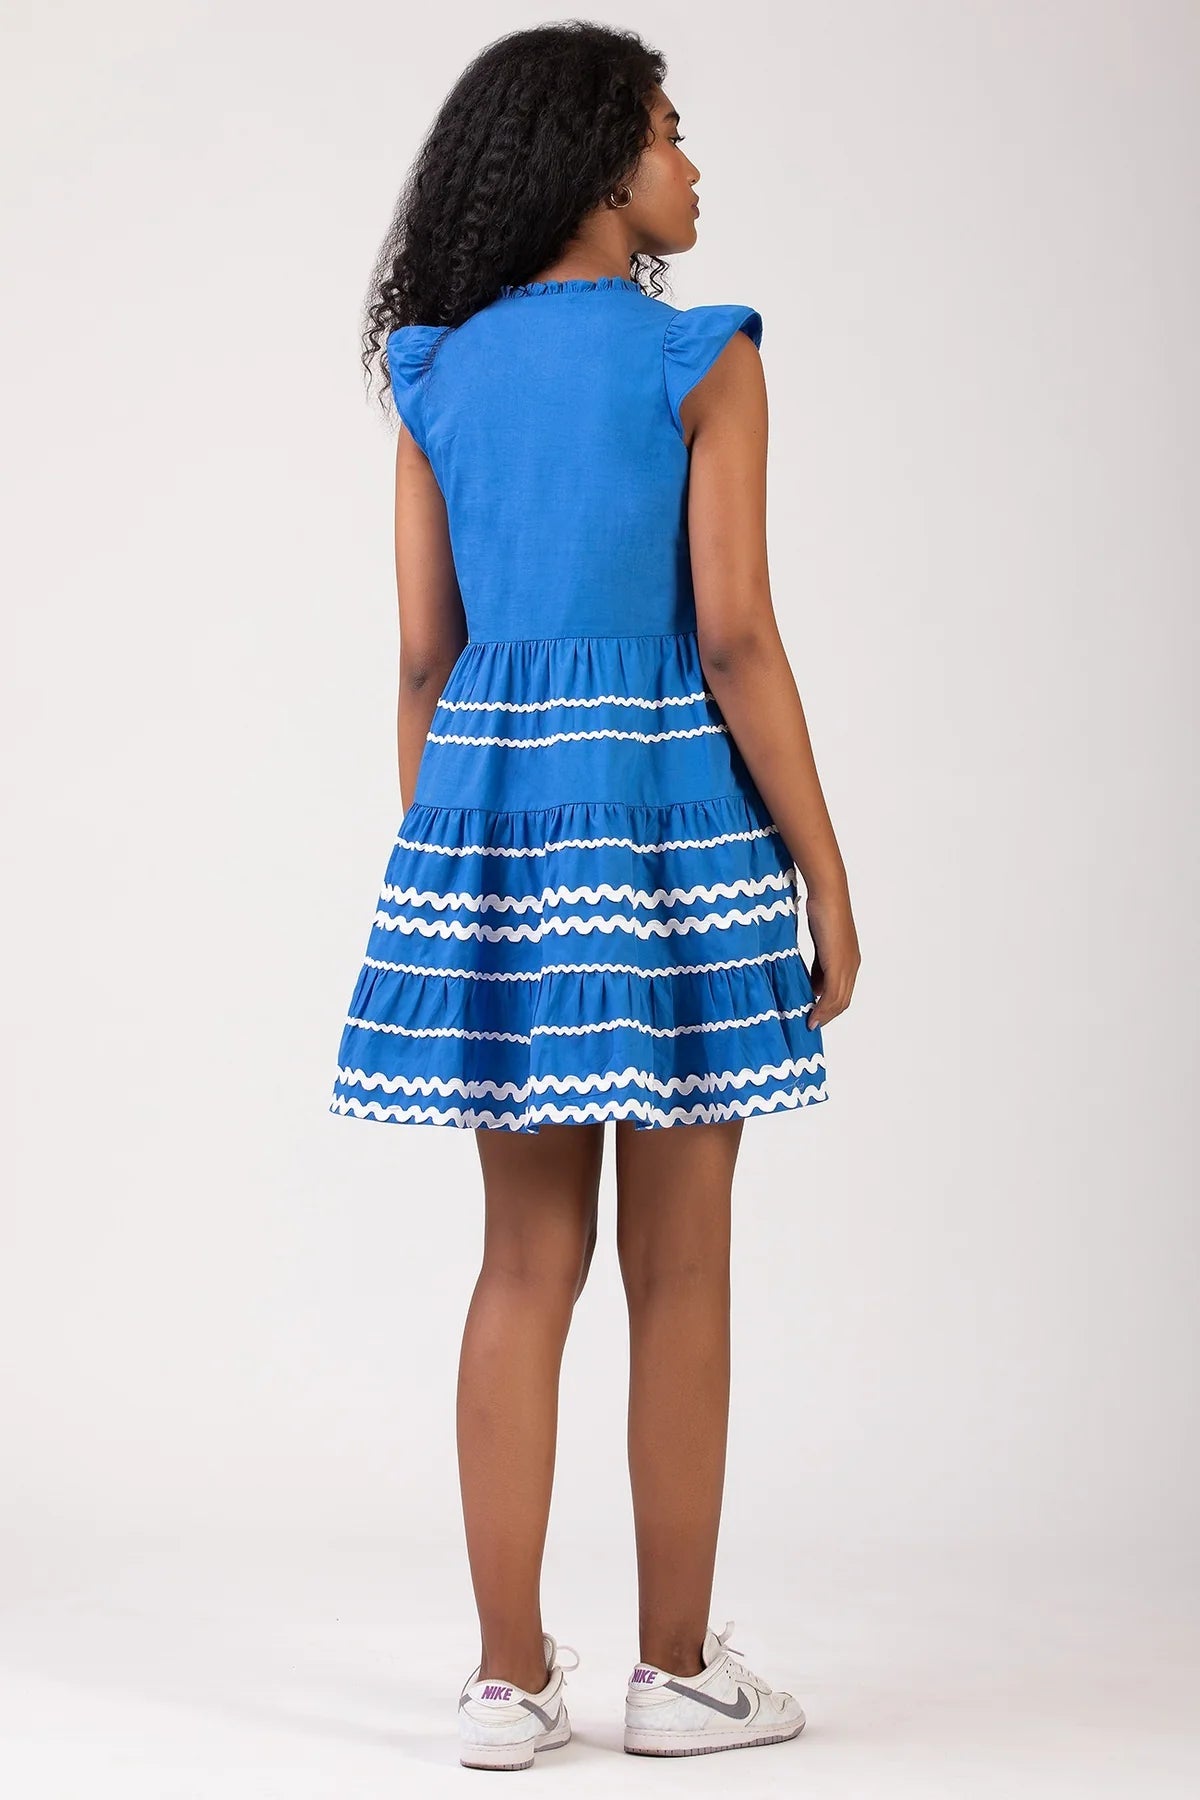 Celina Moon Floss Mini Dress - Blue